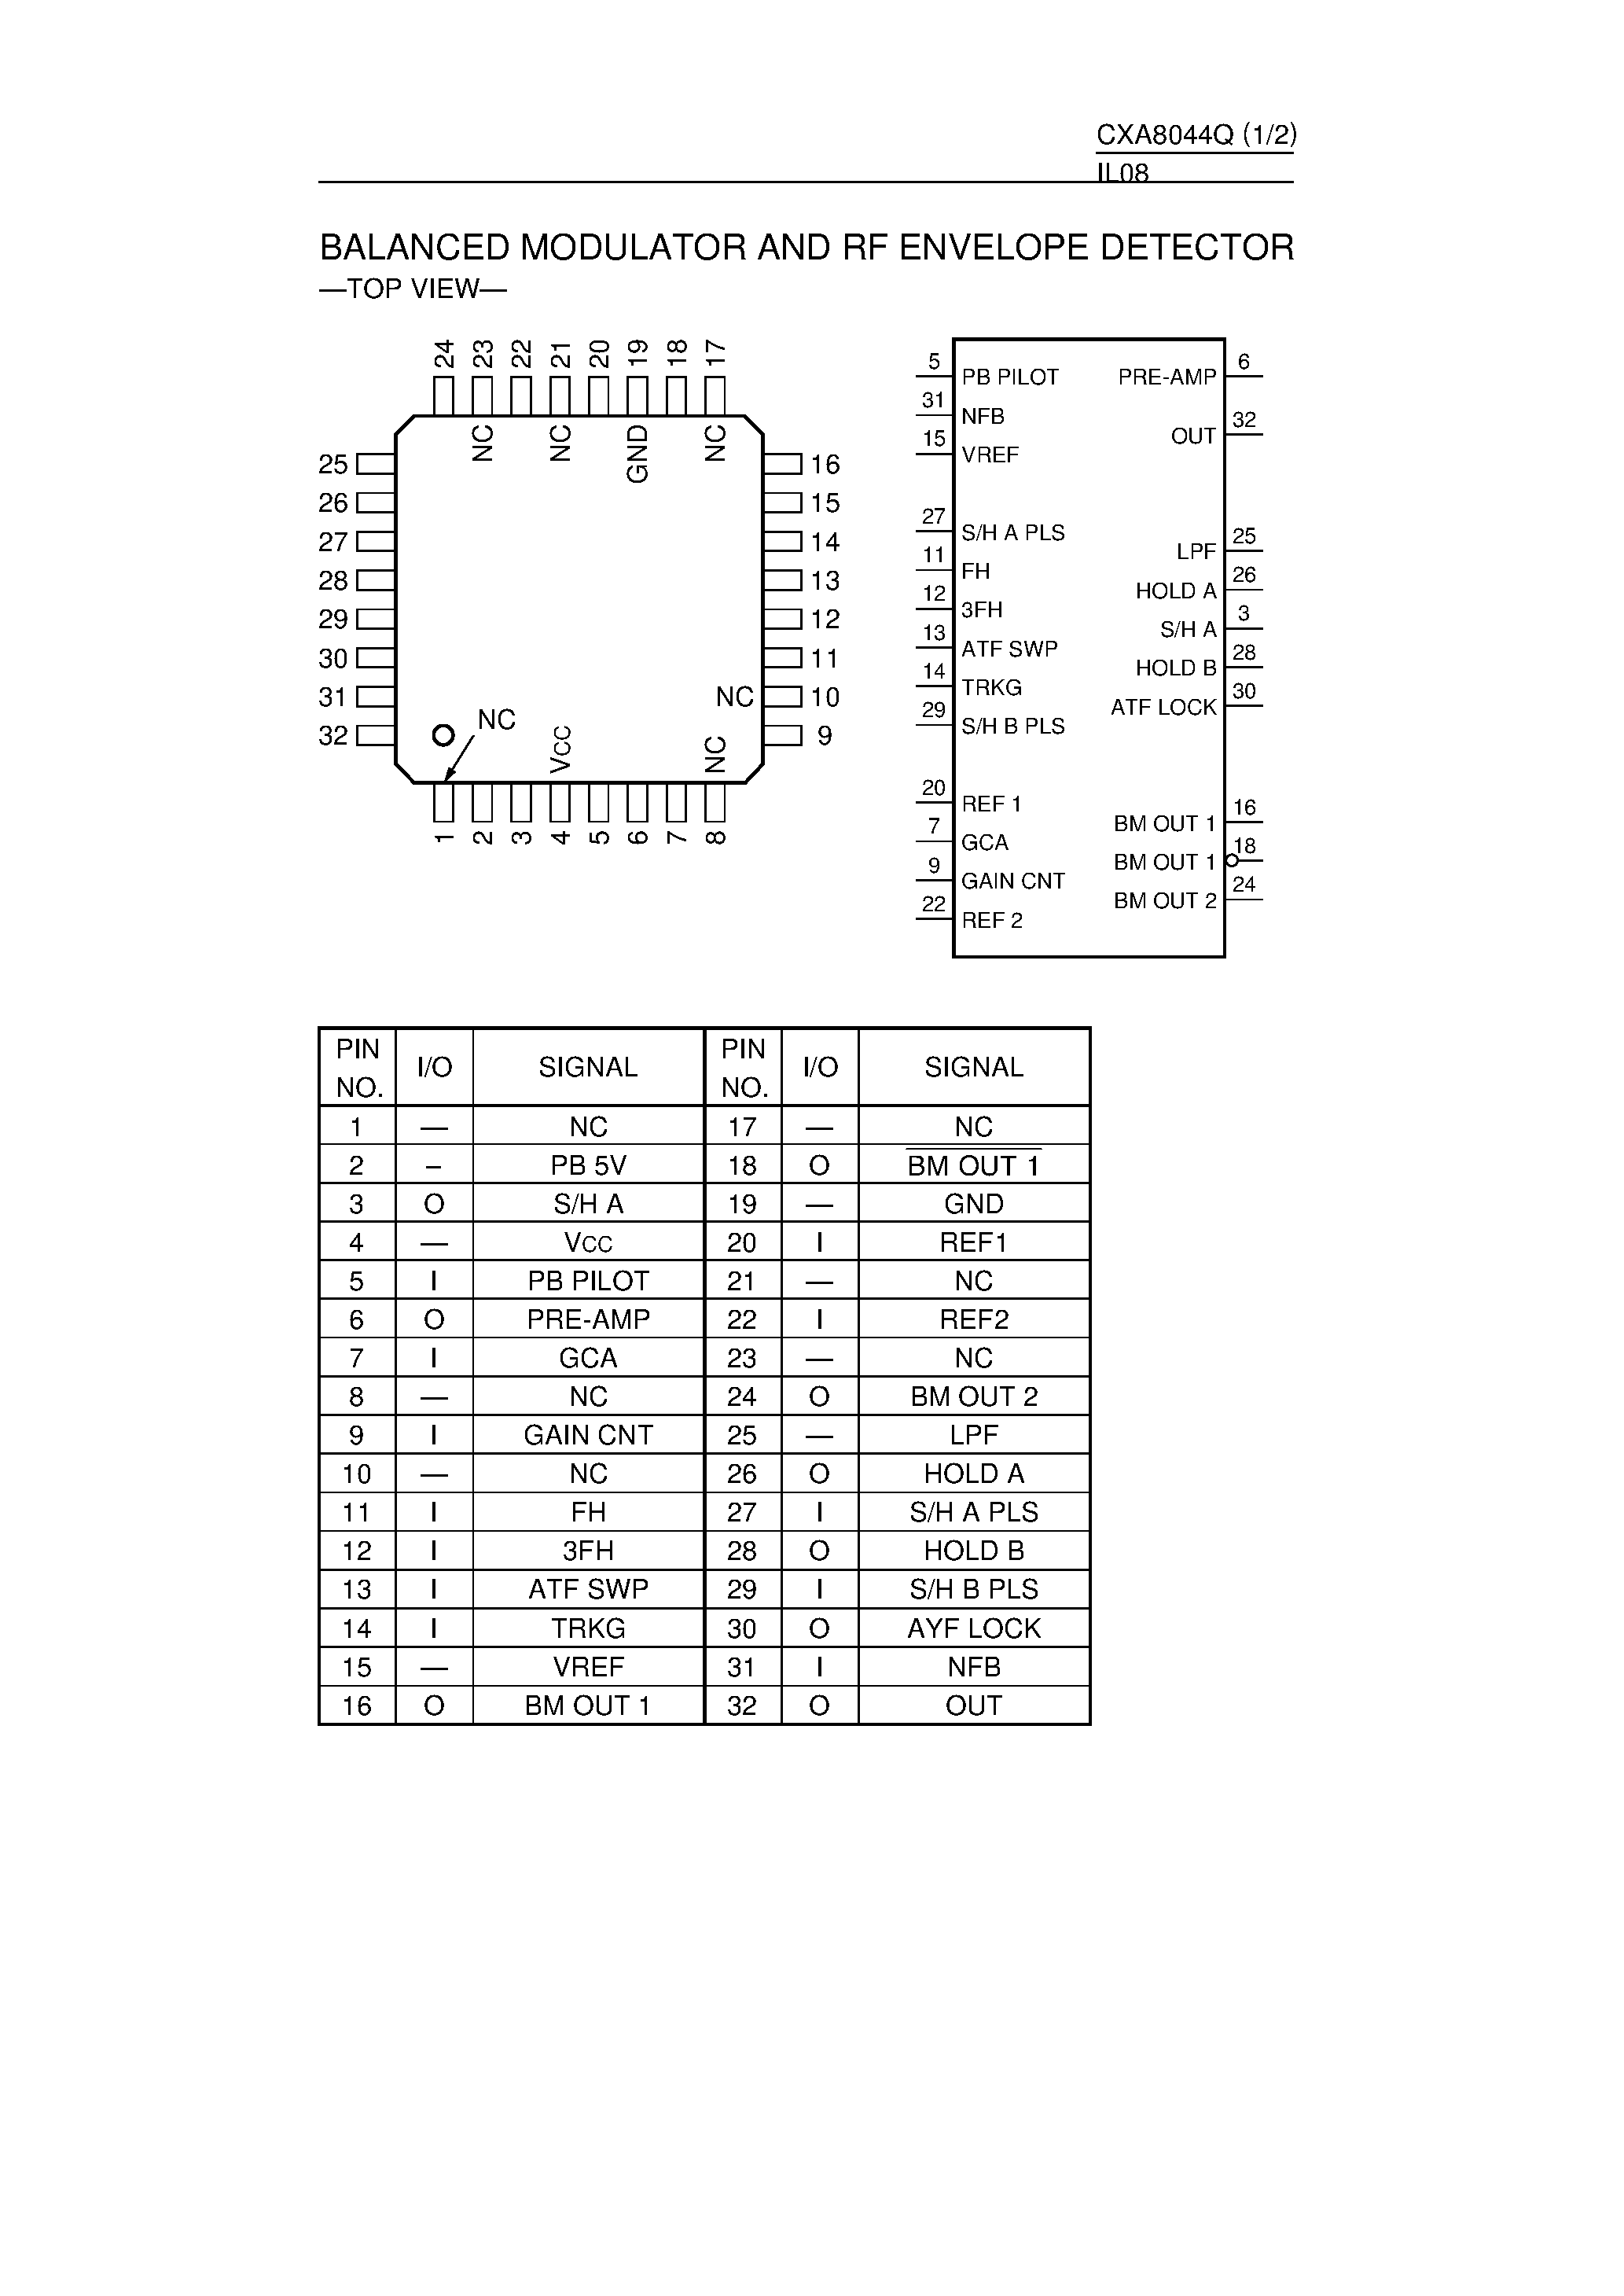 Datasheet CXA8044Q - Balanced Modulator and RF Envelope Detector page 1